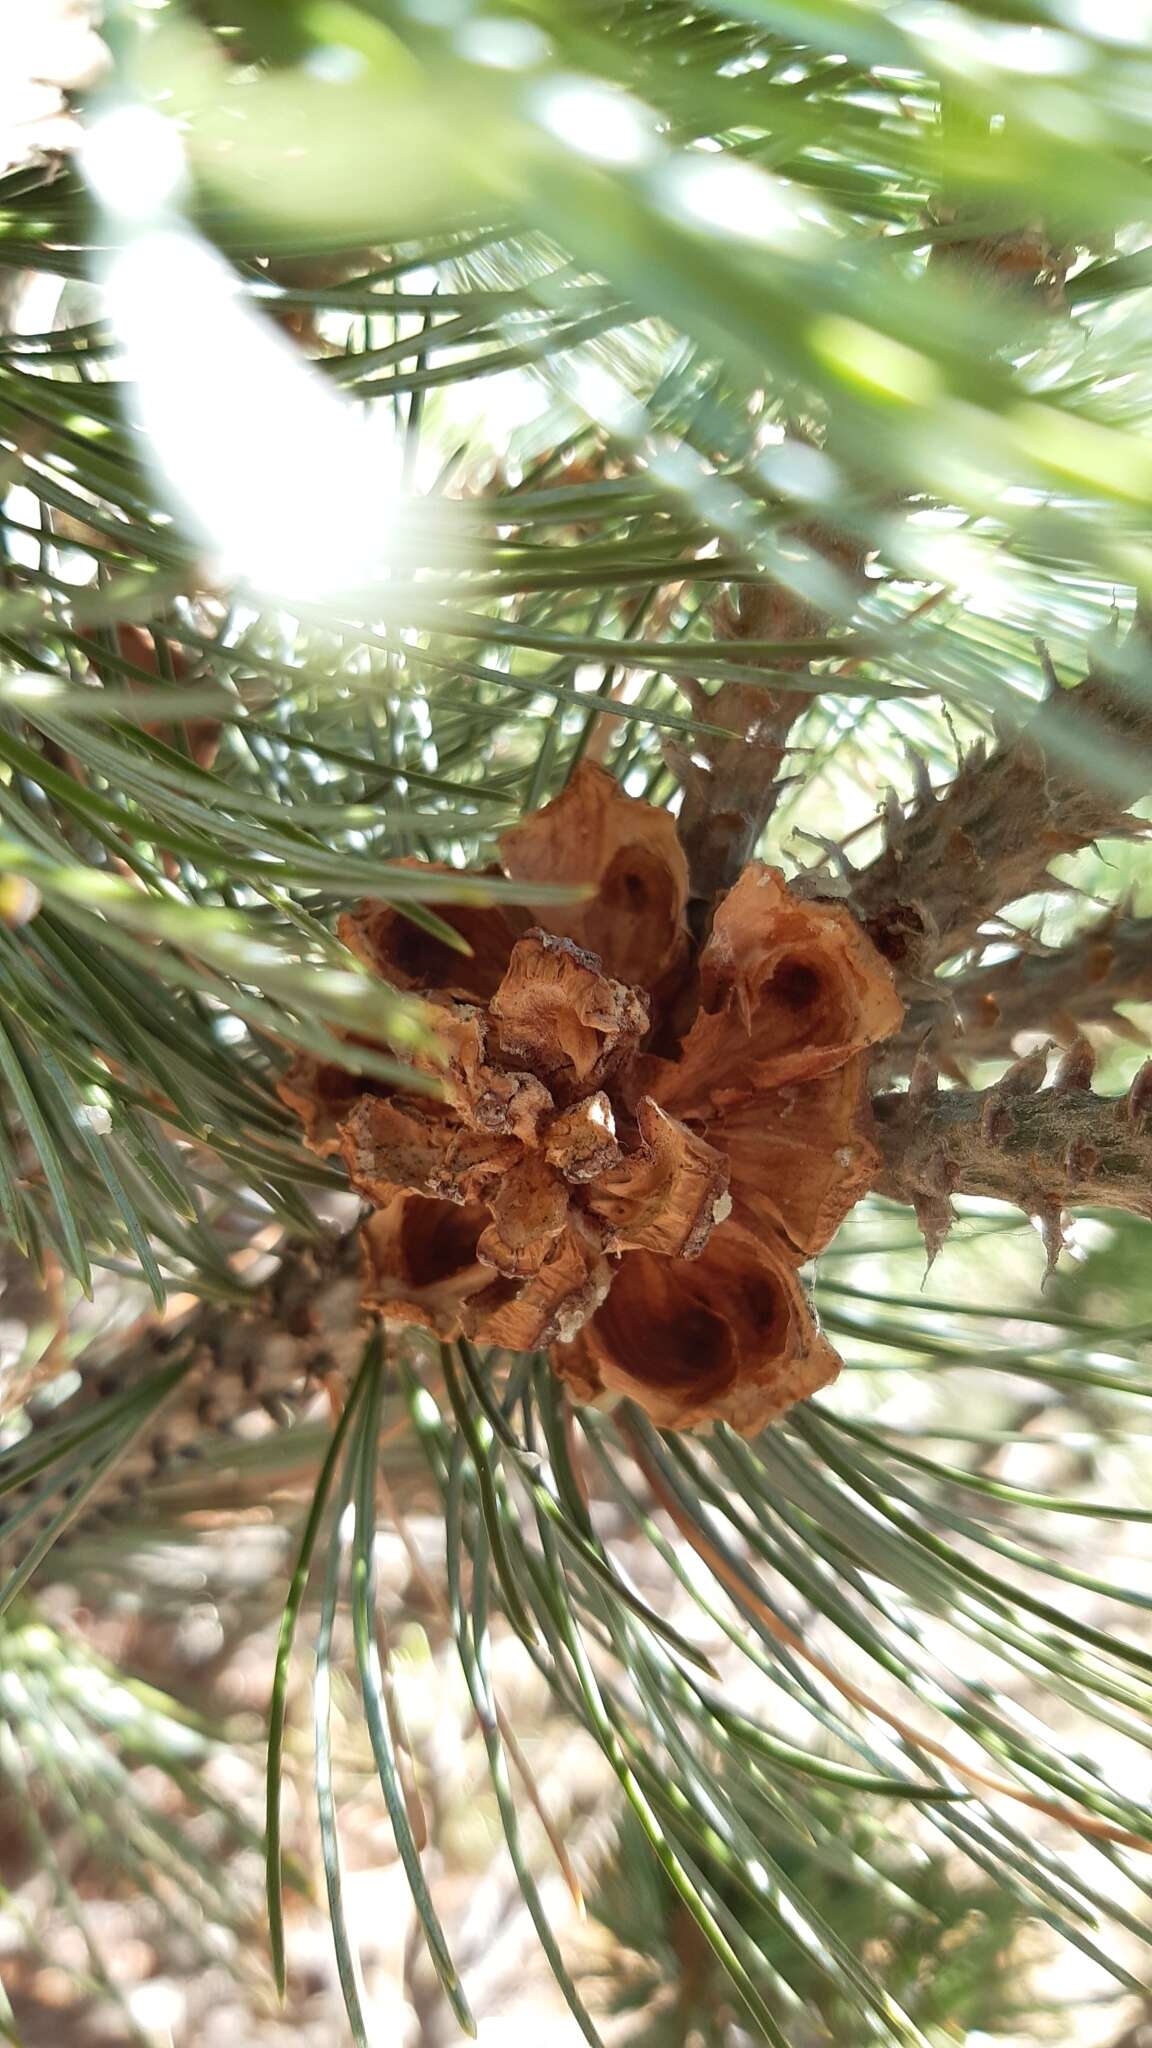 Image of Potosi Pinyon Pine